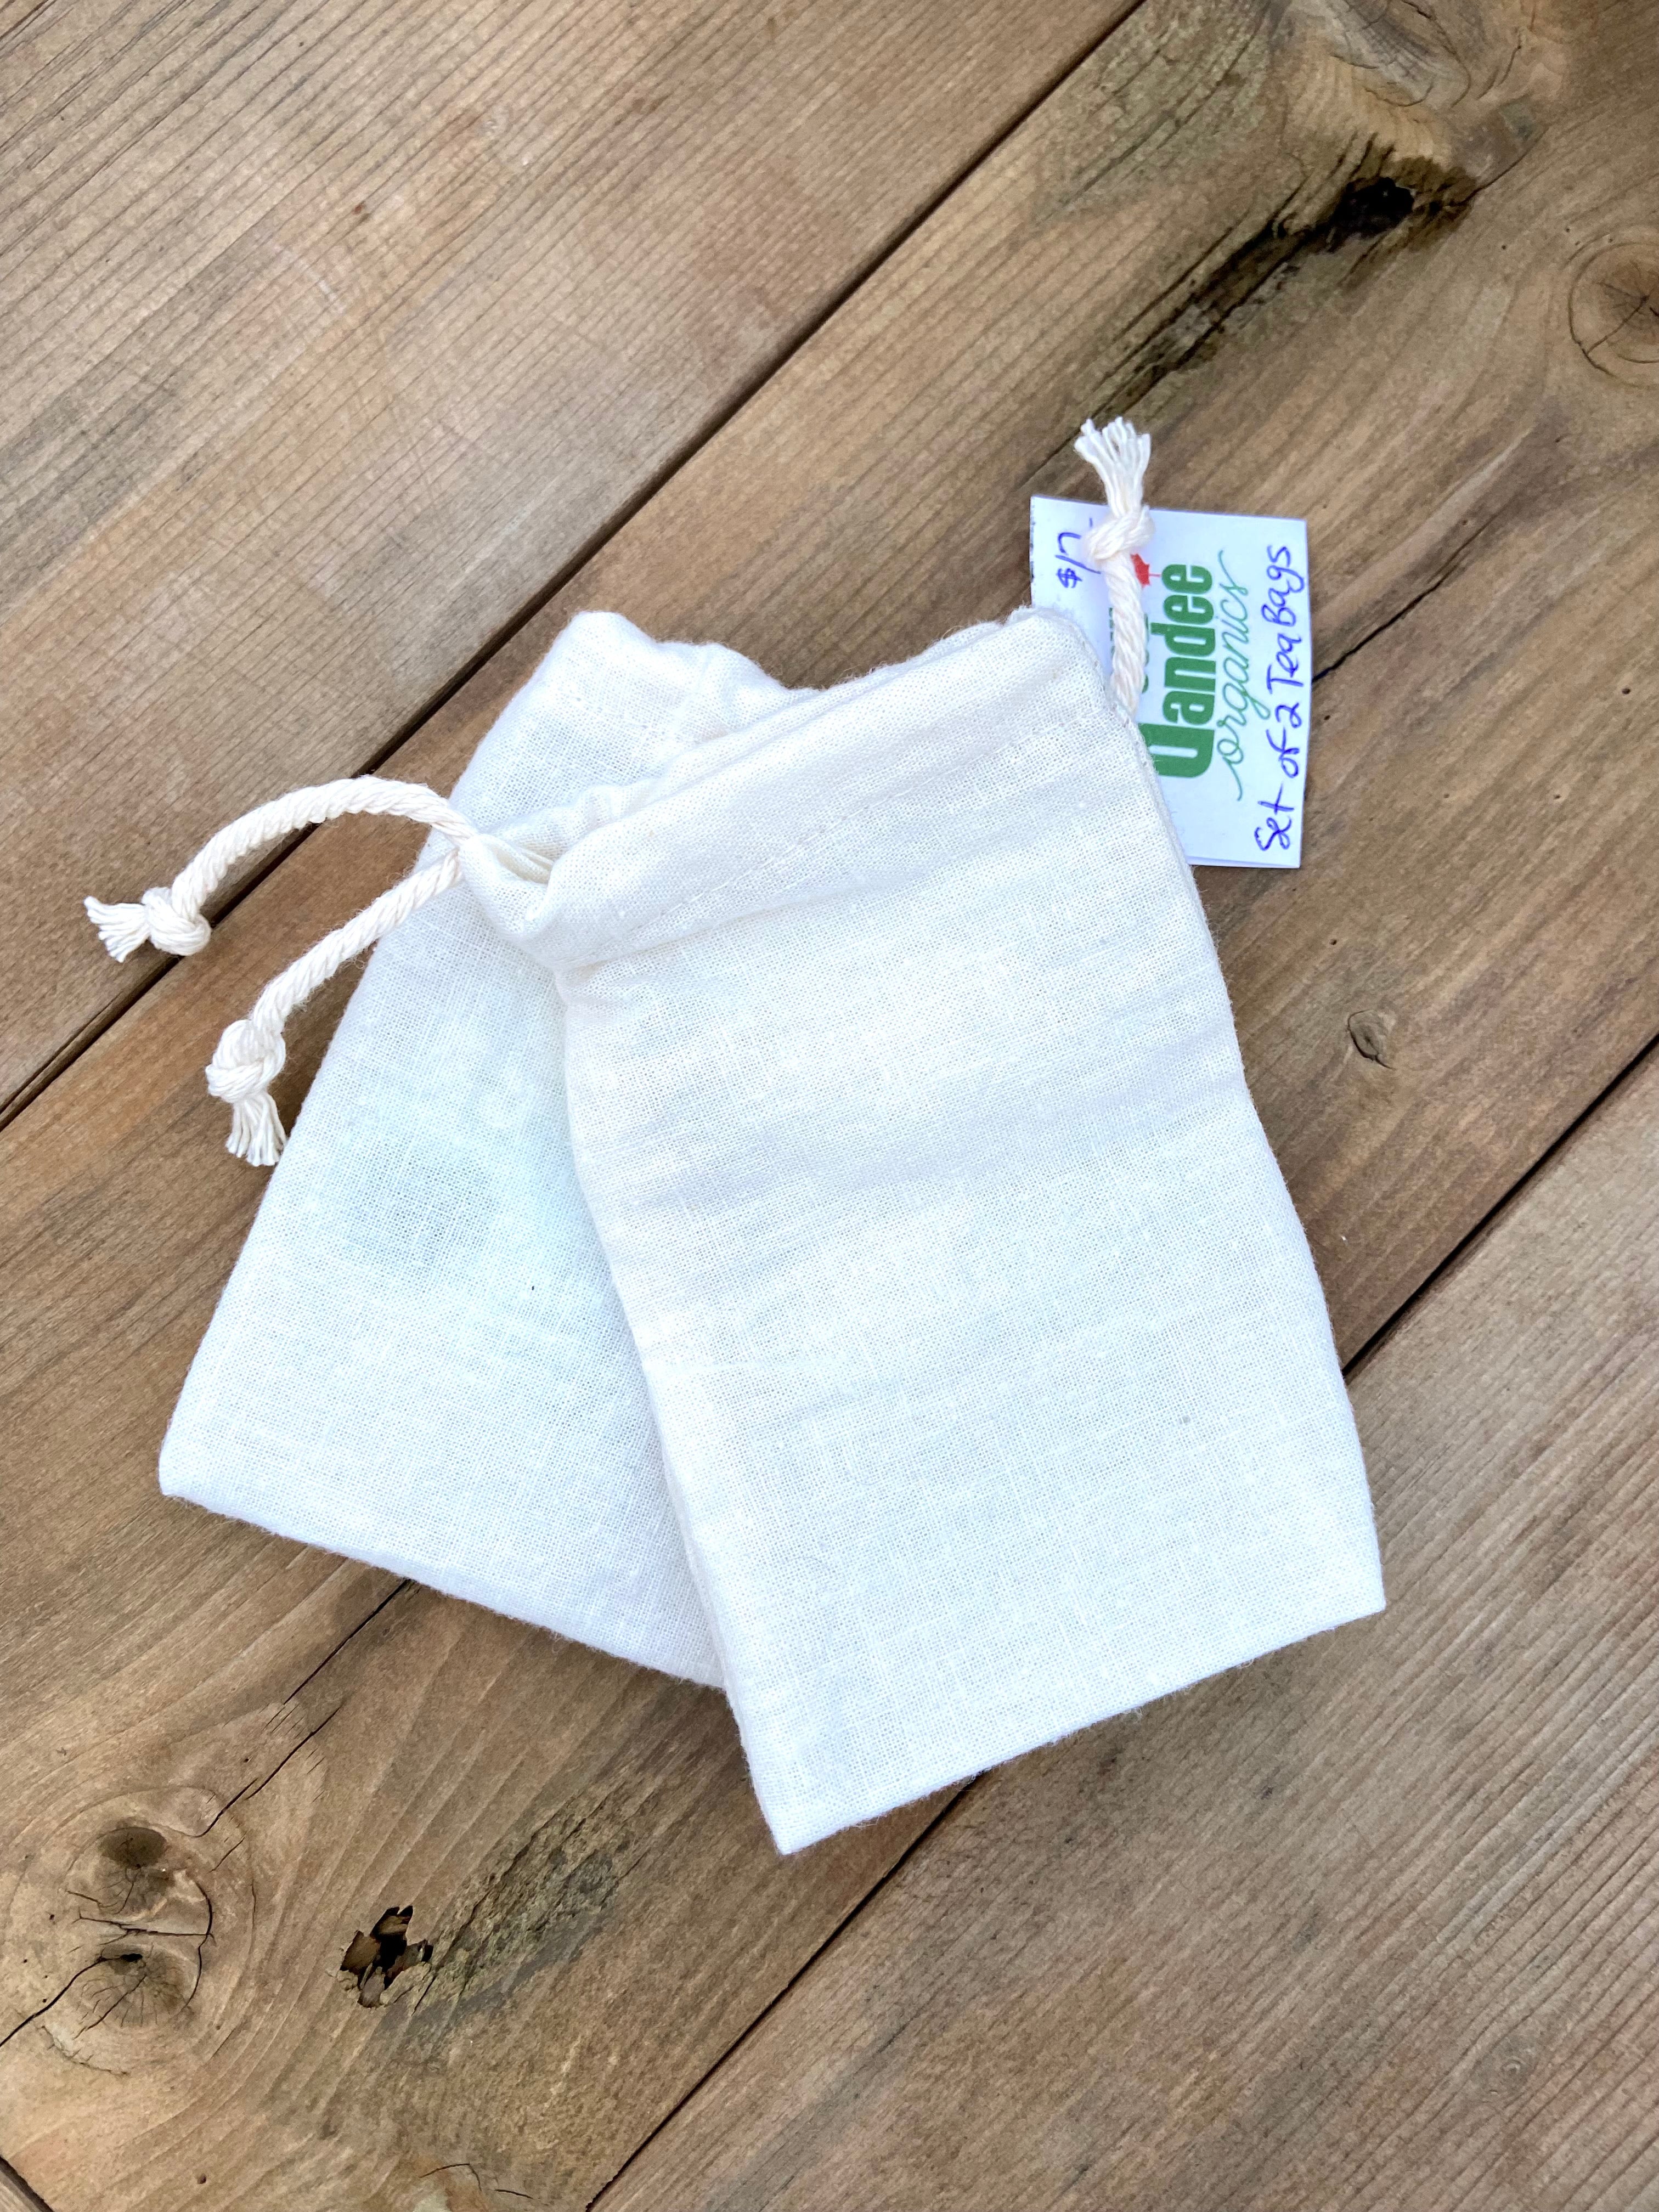 Sewdandee - Reusable Tea Bags (set of 2)